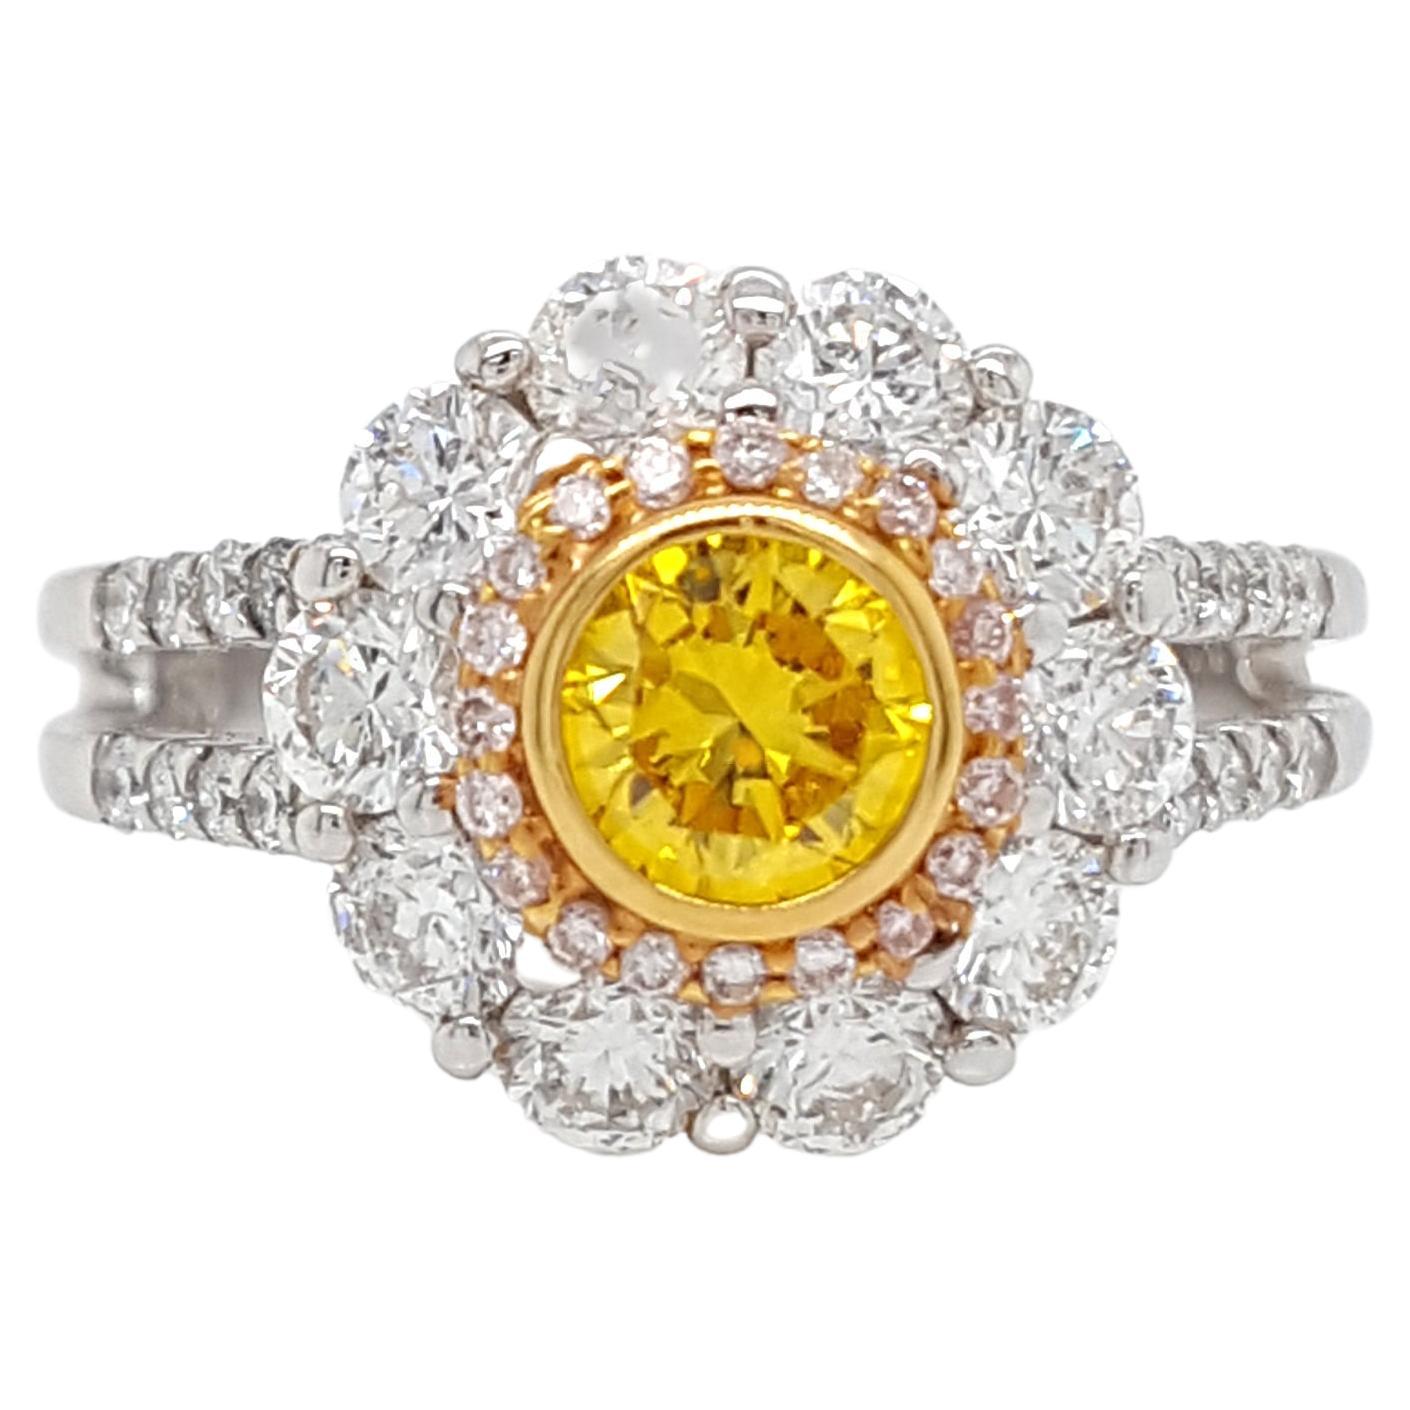 0.44 Carat Fancy Vivid Yellow Diamond Engagement Cocktail Ring, GIA Certificate 